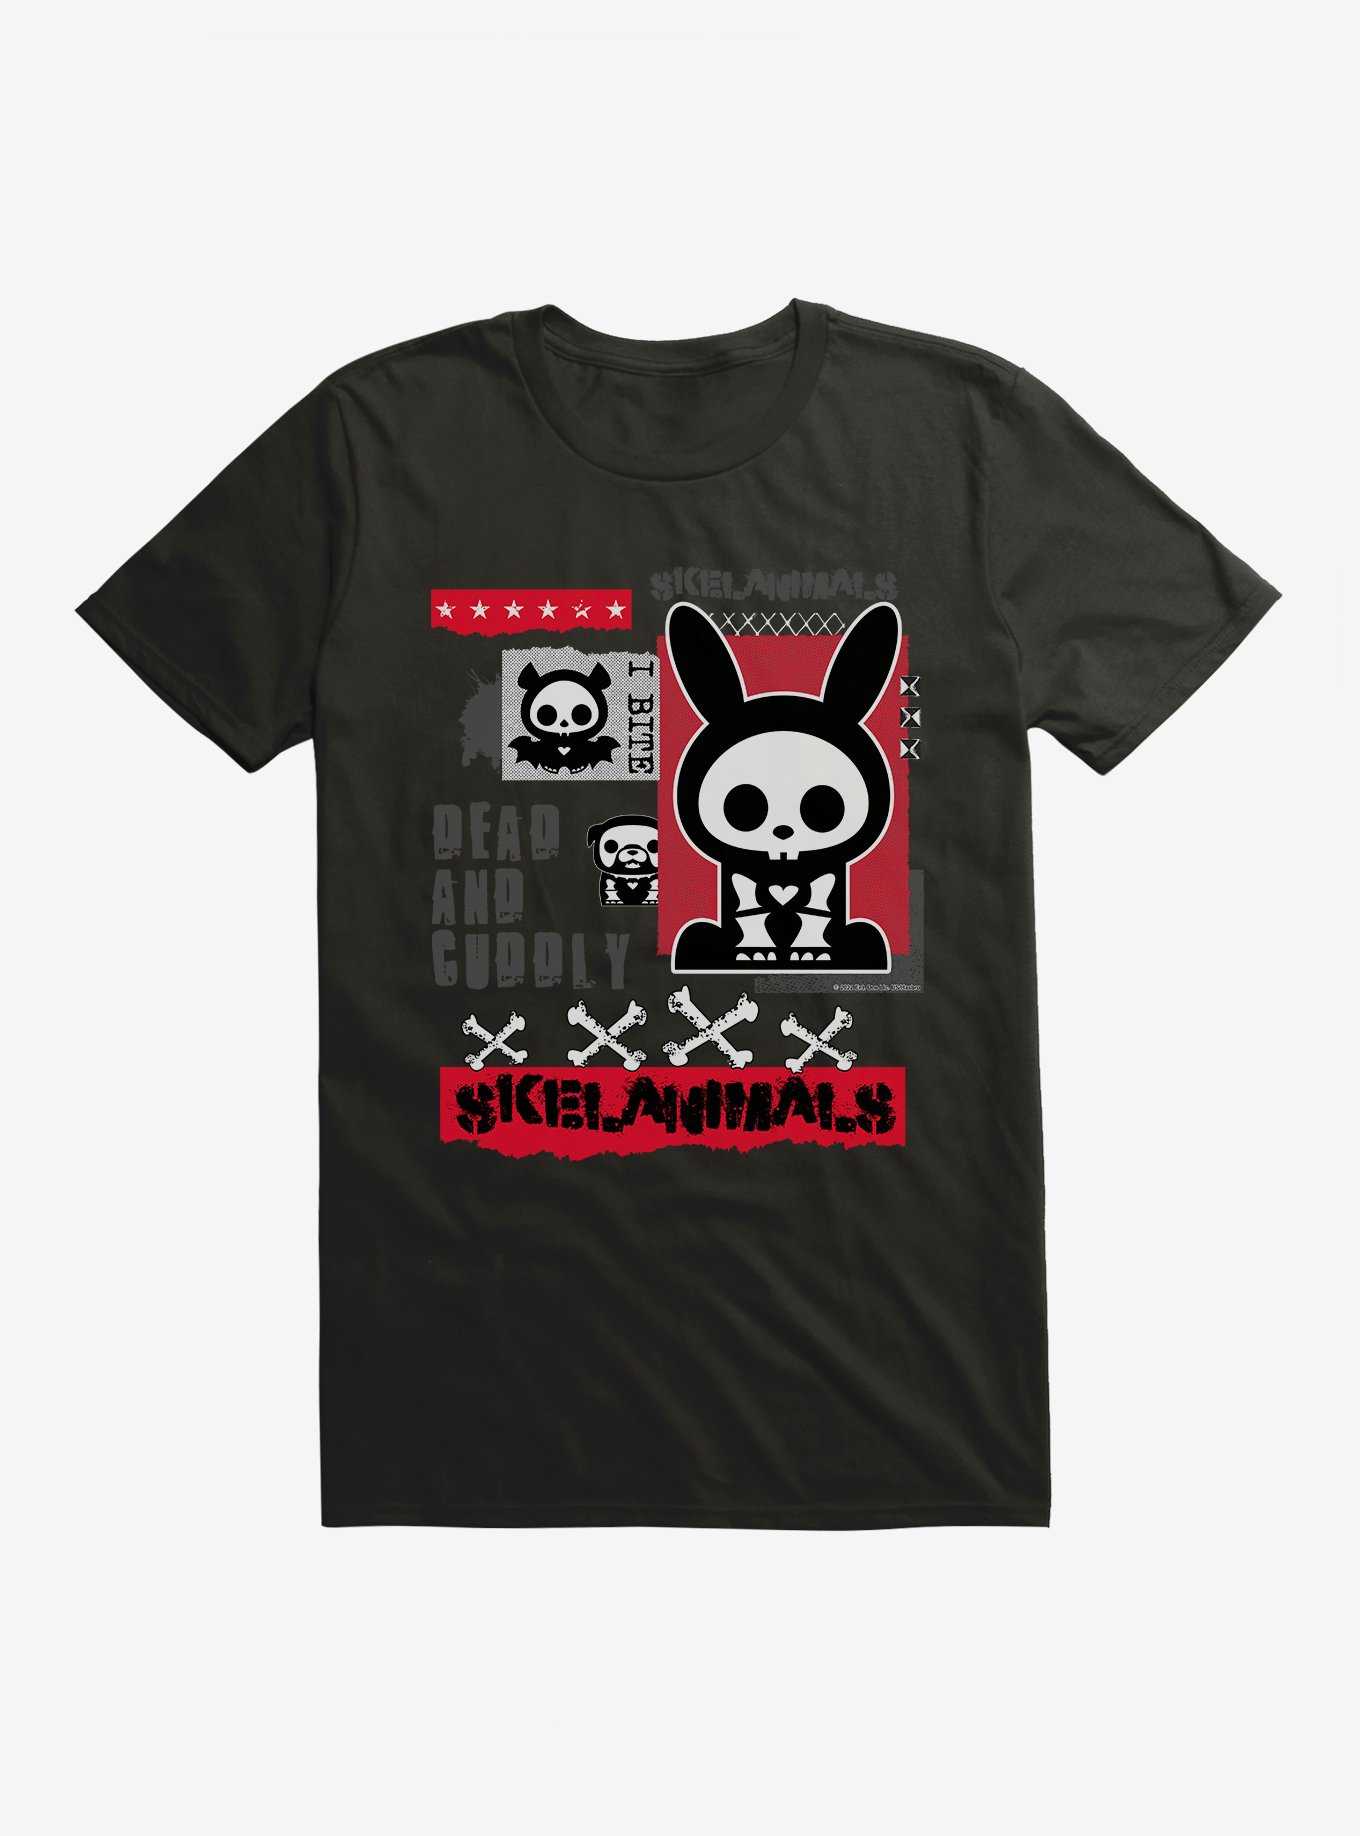 OFFICIAL Skelanimals Shirts & Merchandise